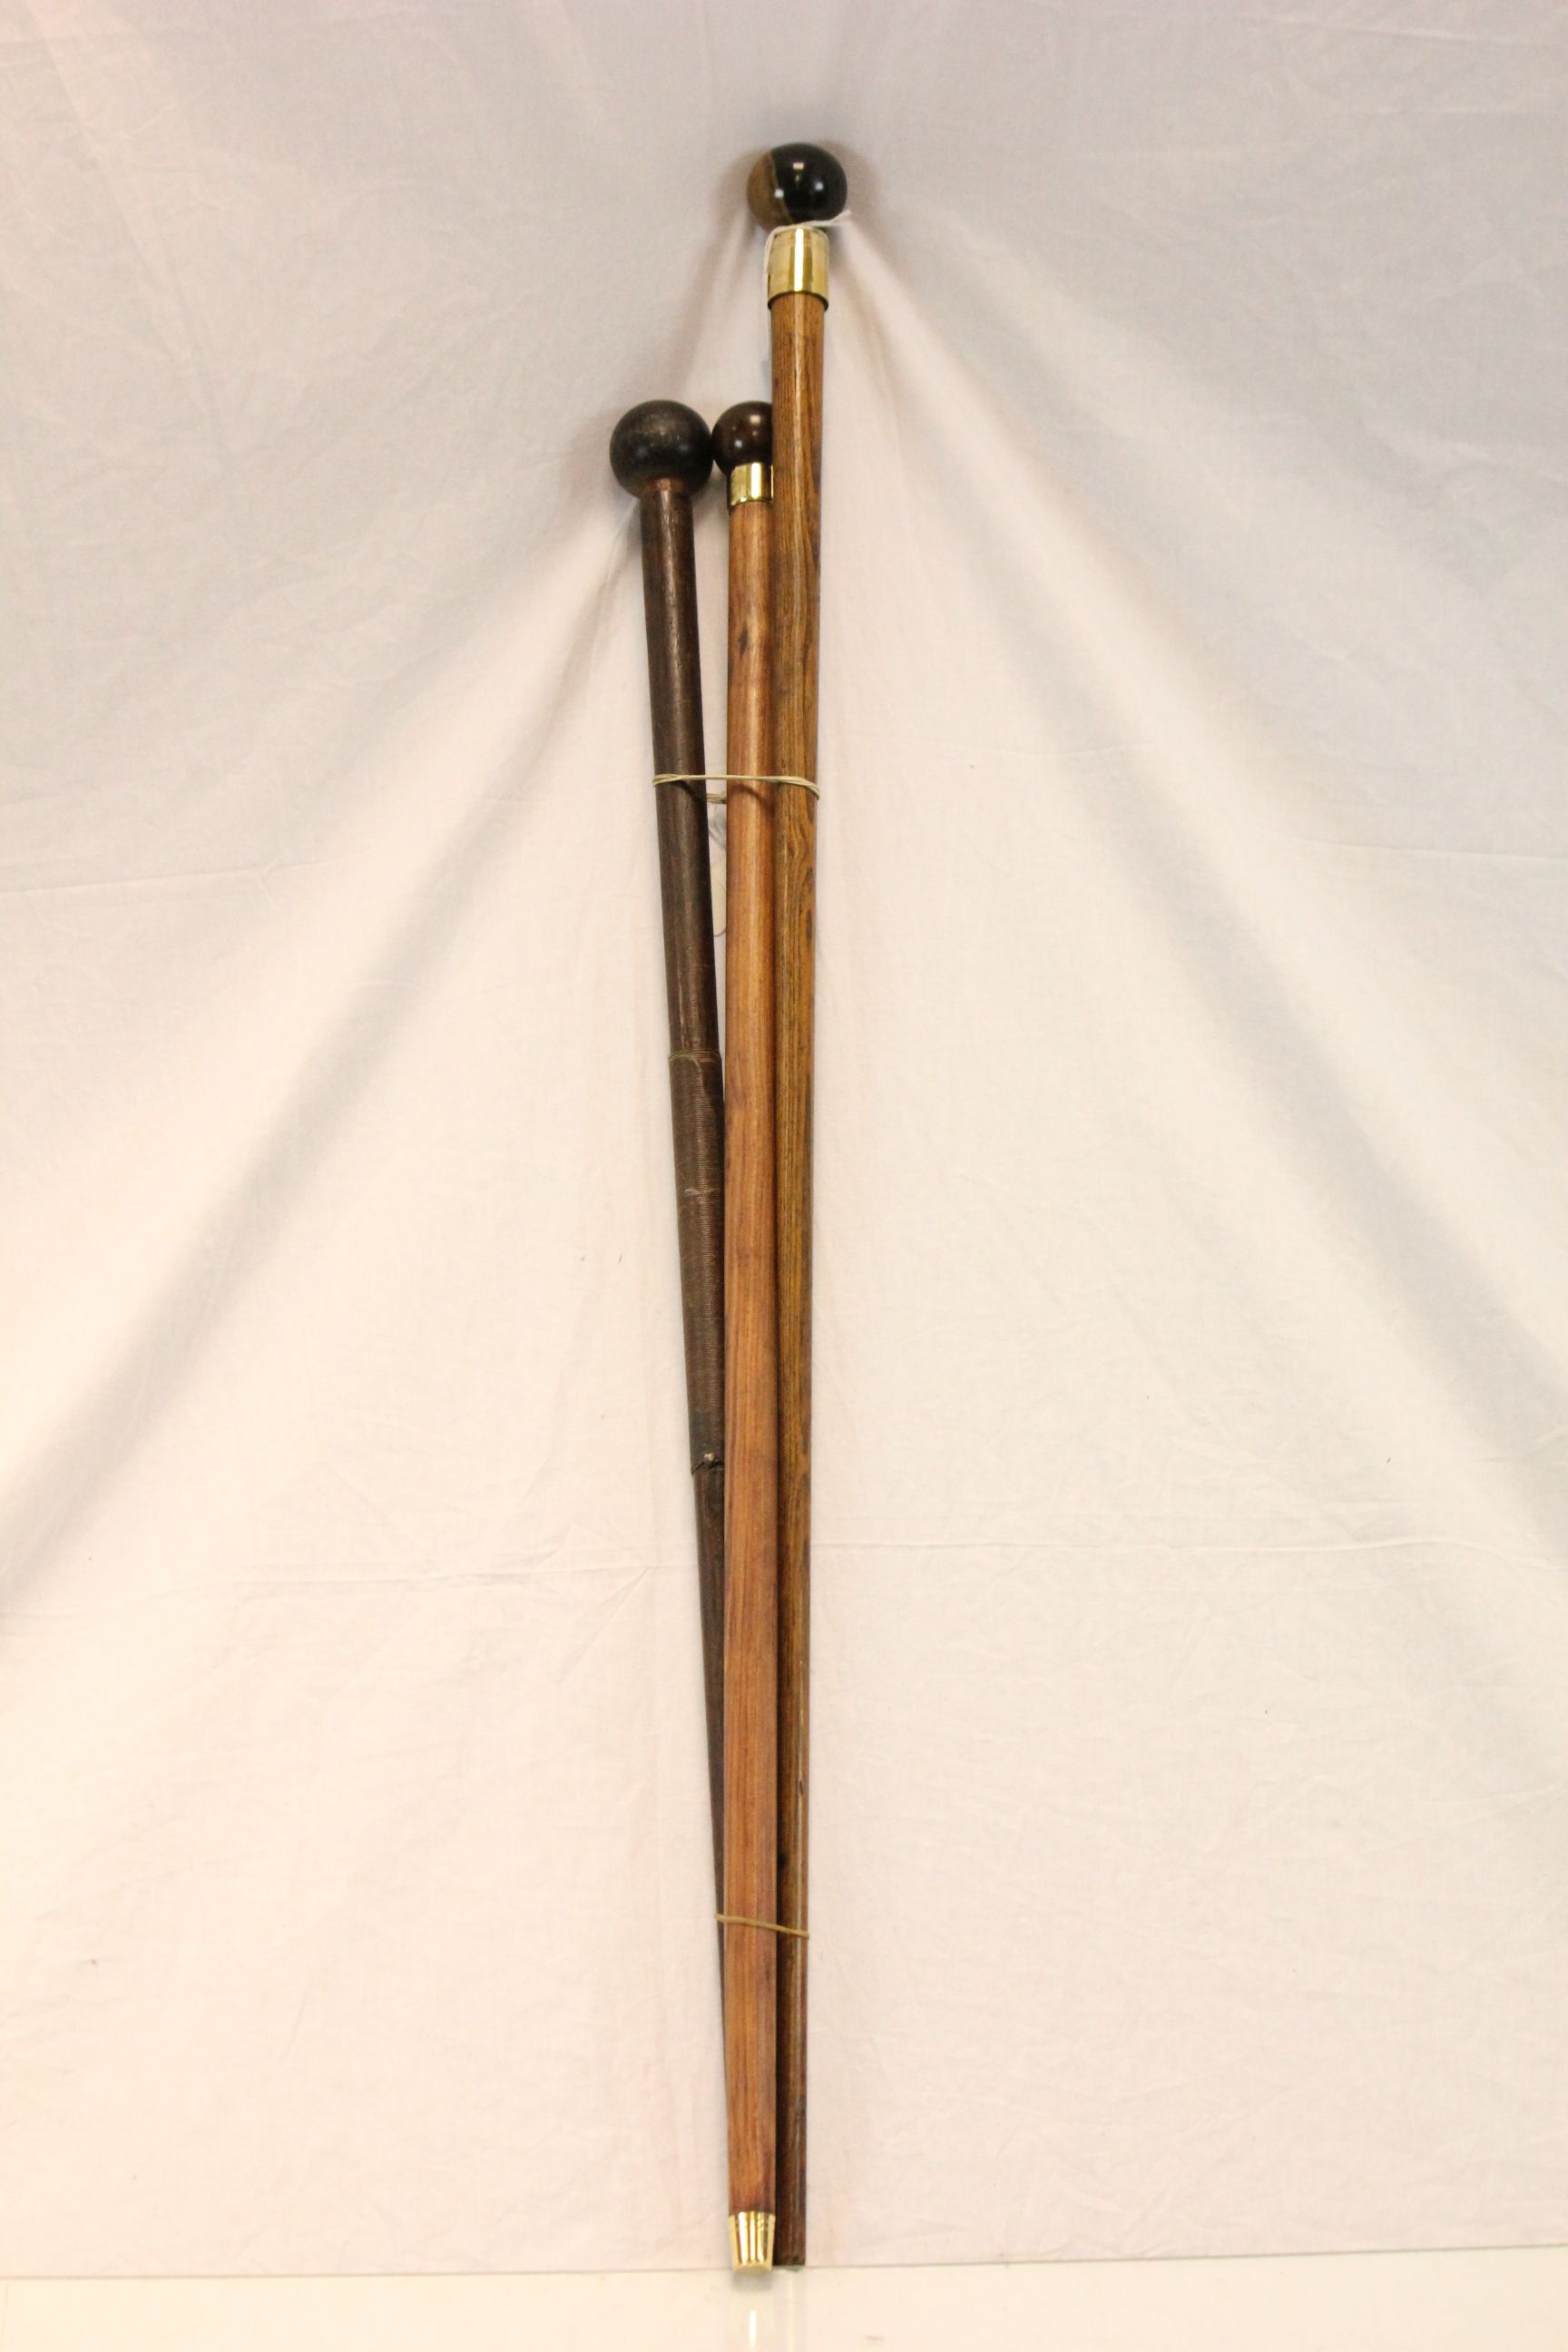 Three Walking Sticks, each with ball handles